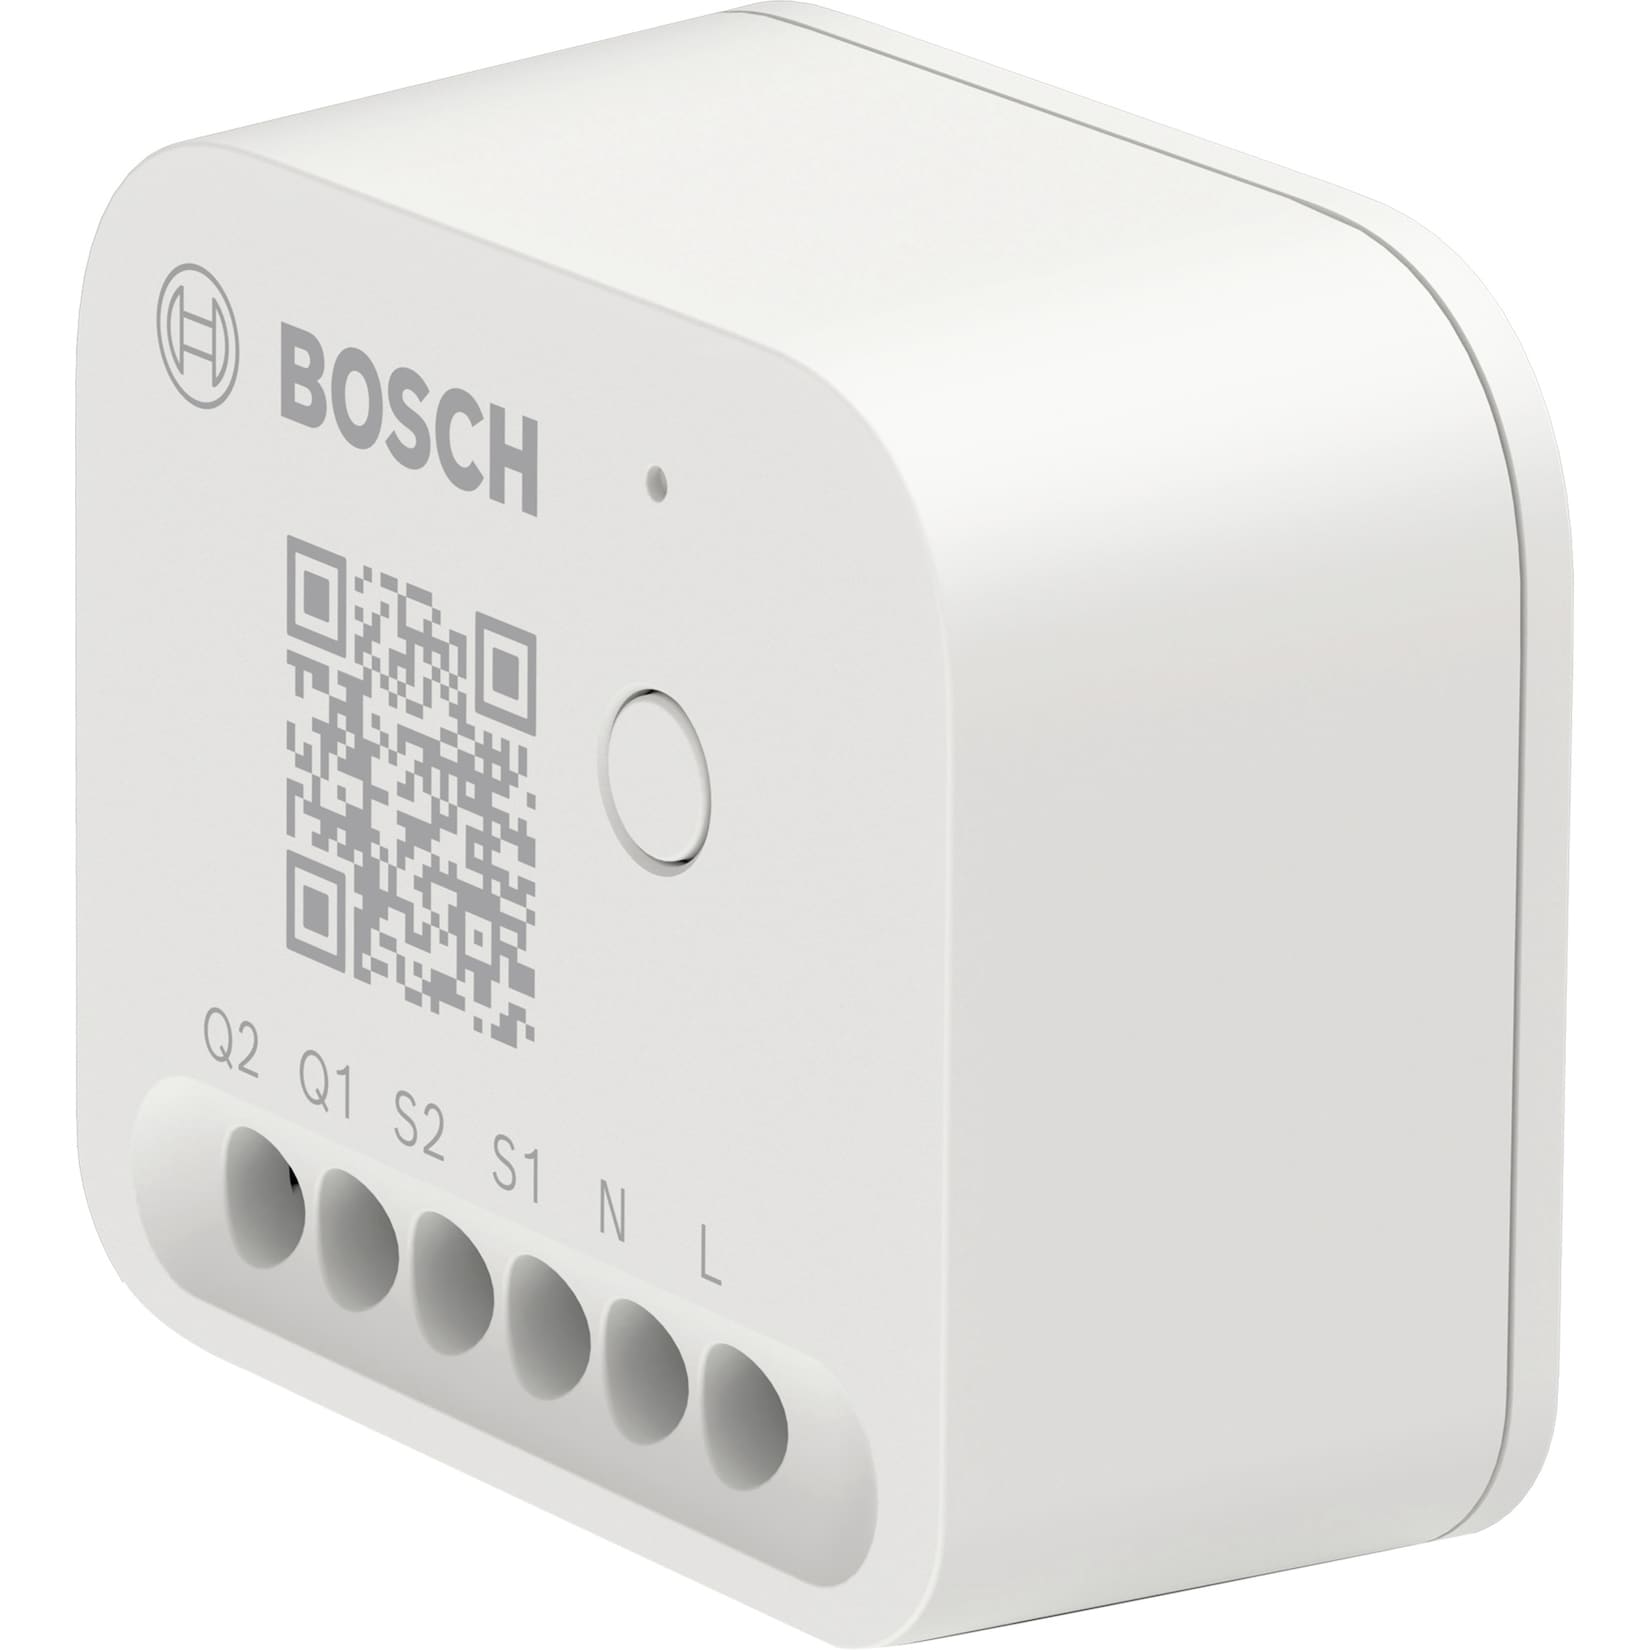 Bosch Relais Smart Home Licht-/ Rollladensteuerung II